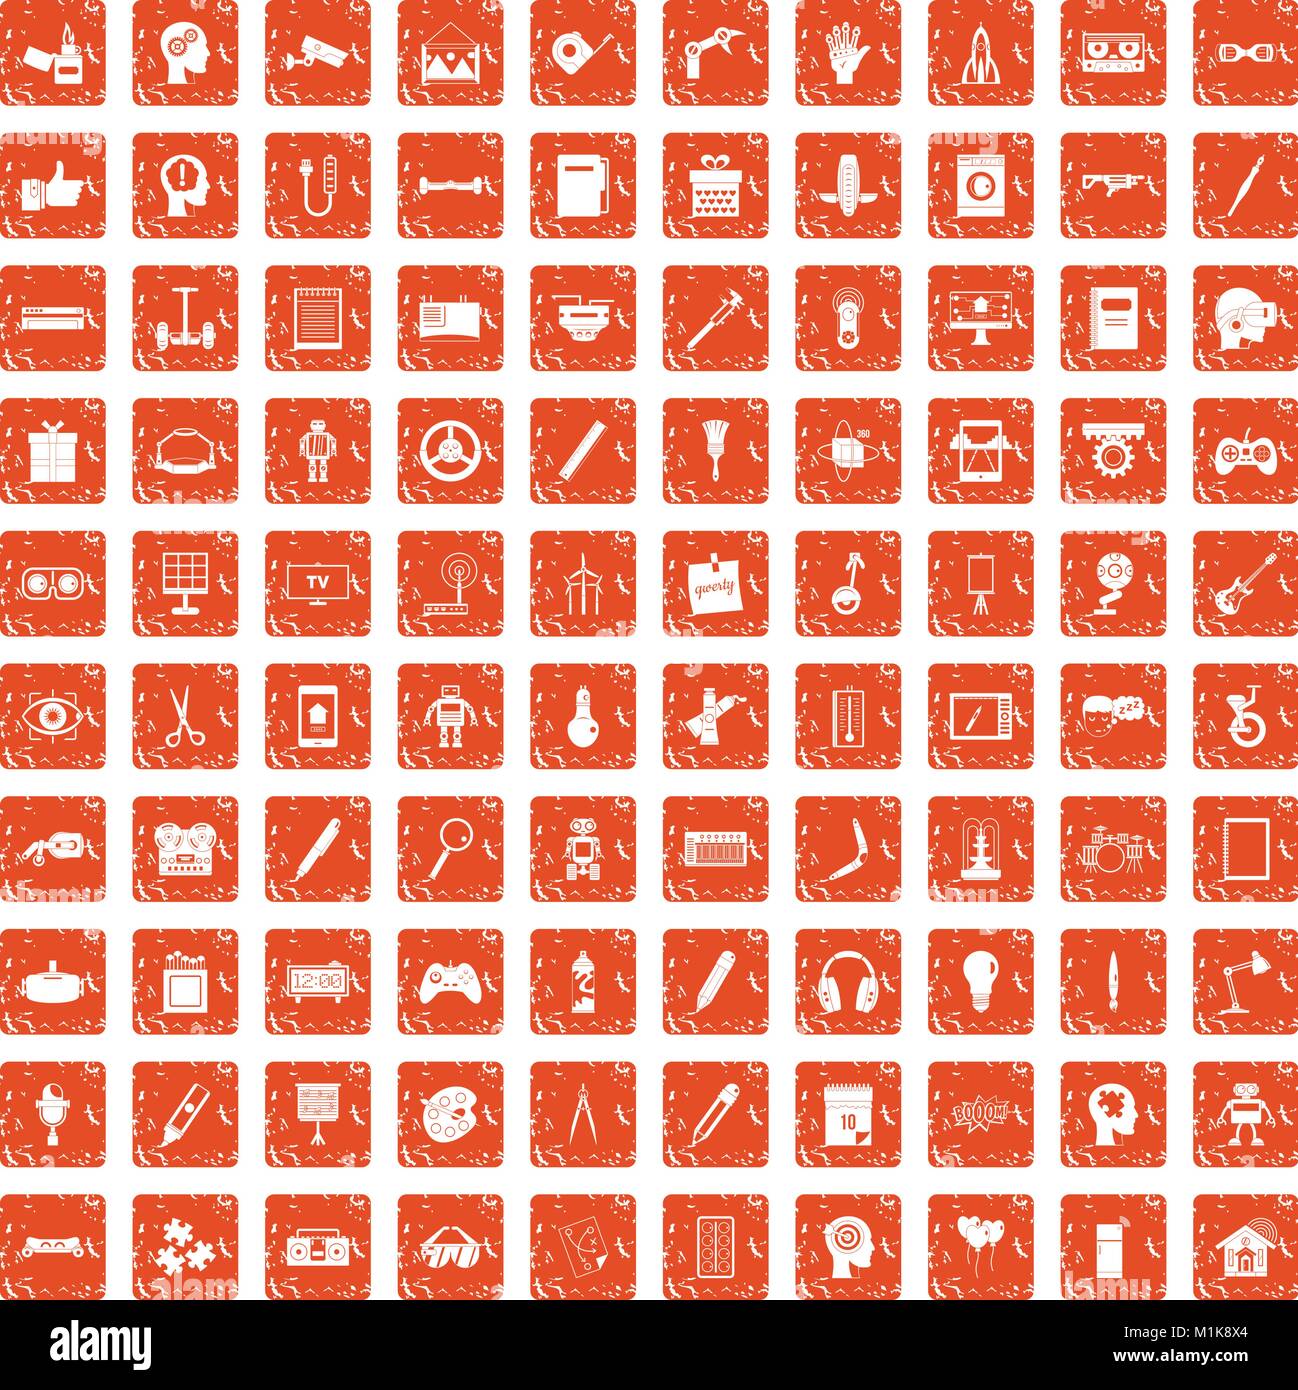 100 kreative Idee Icons Set grunge orange Stock Vektor